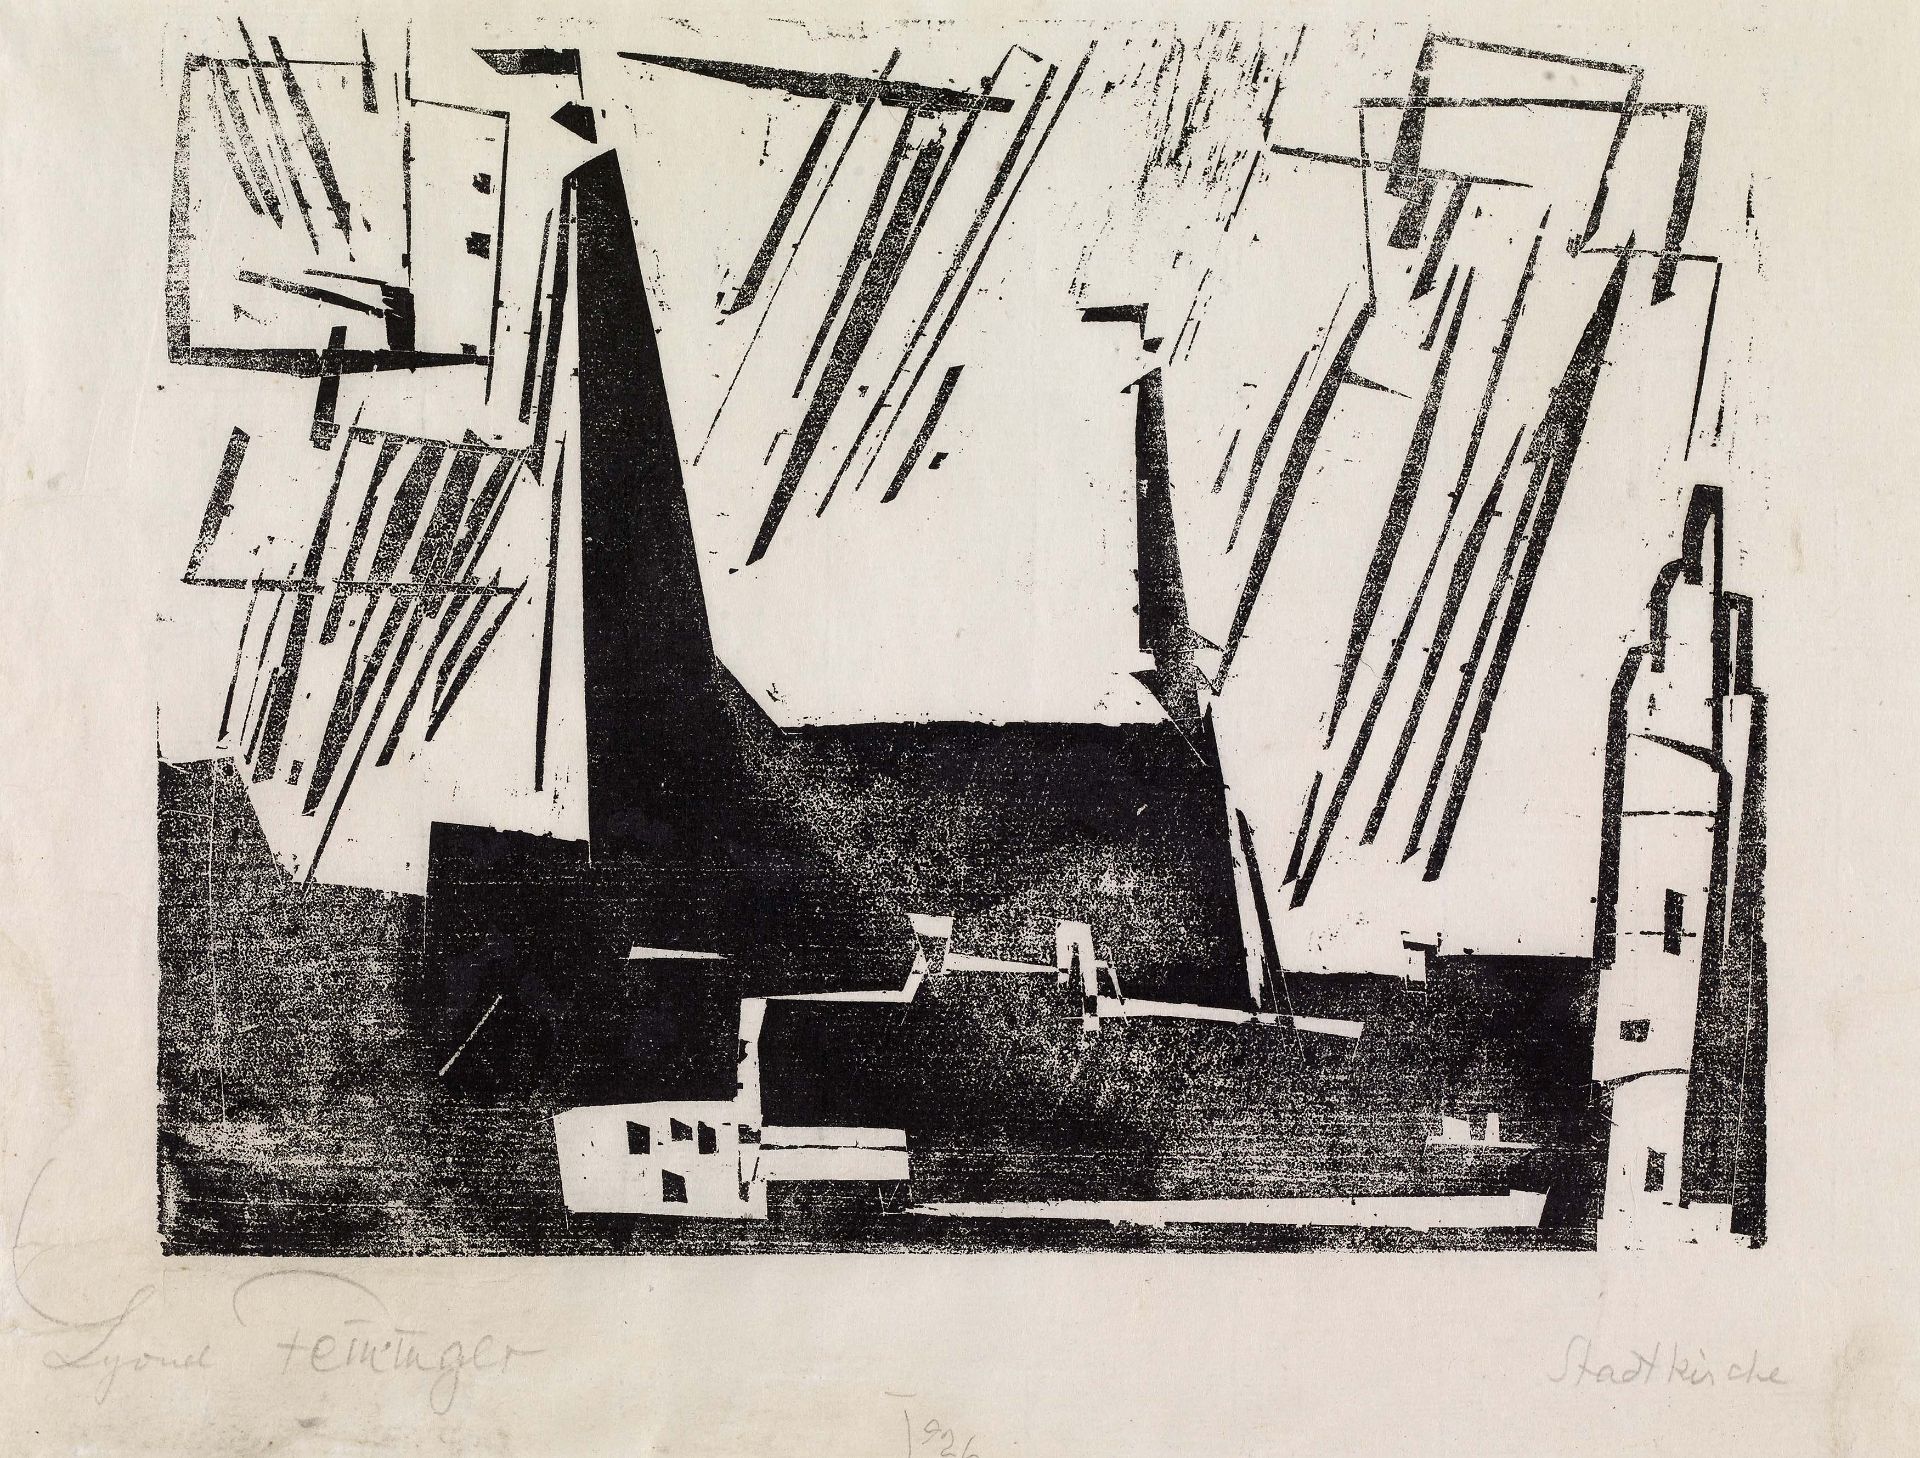 FEININGER, LYONELNew York 1871 - 1956Titel: "Stadtkirche". Datierung: 1926. Technik: Holzschnitt auf